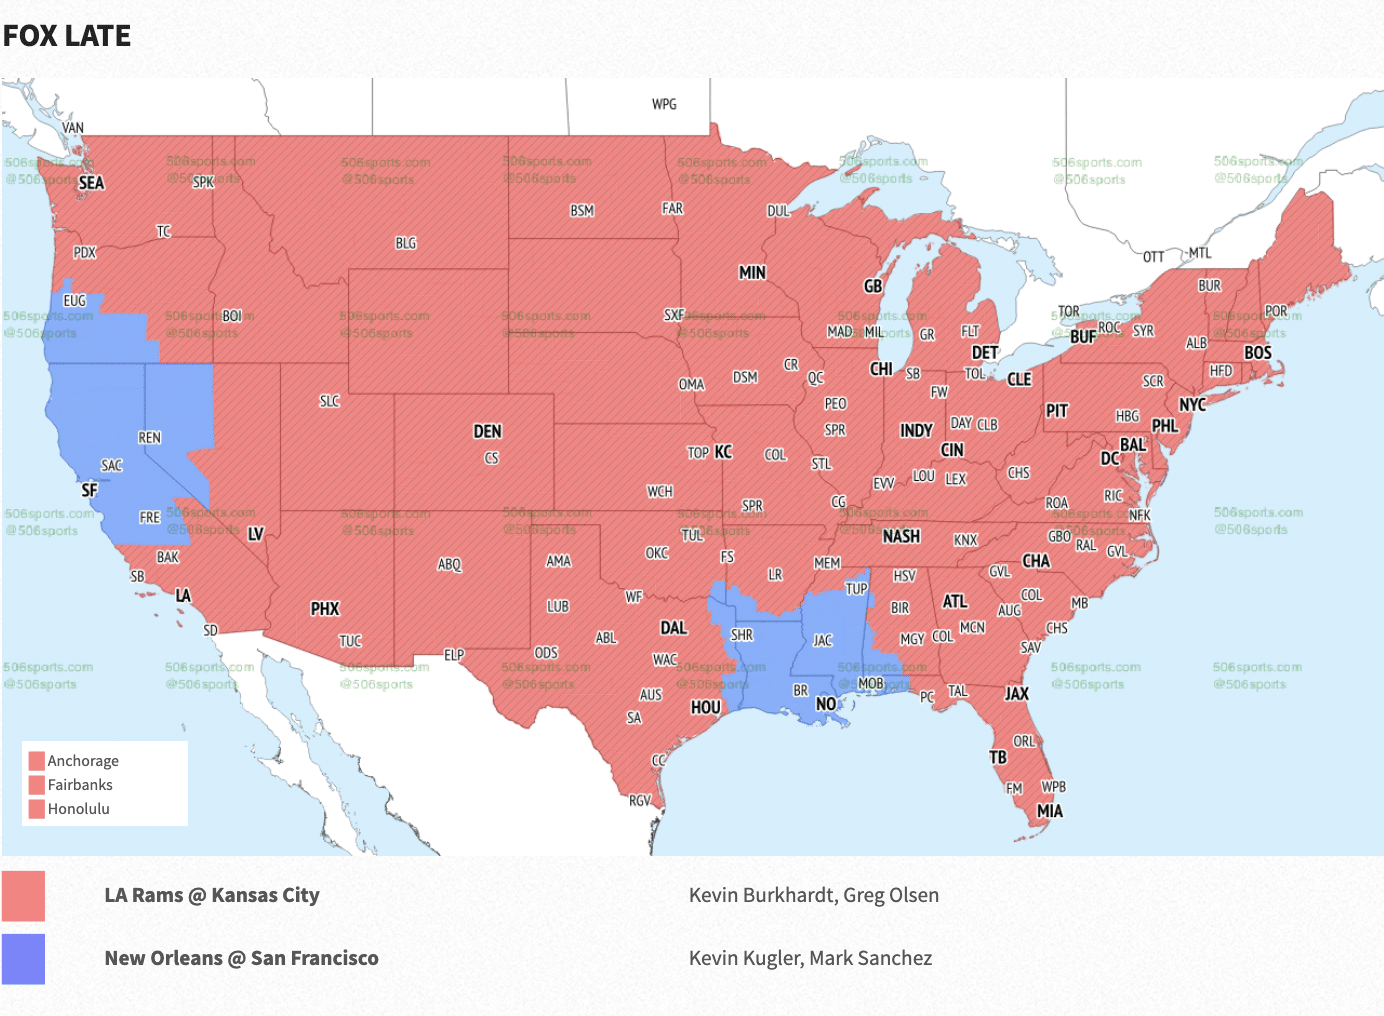 NFL Week 12 Coverage Maps